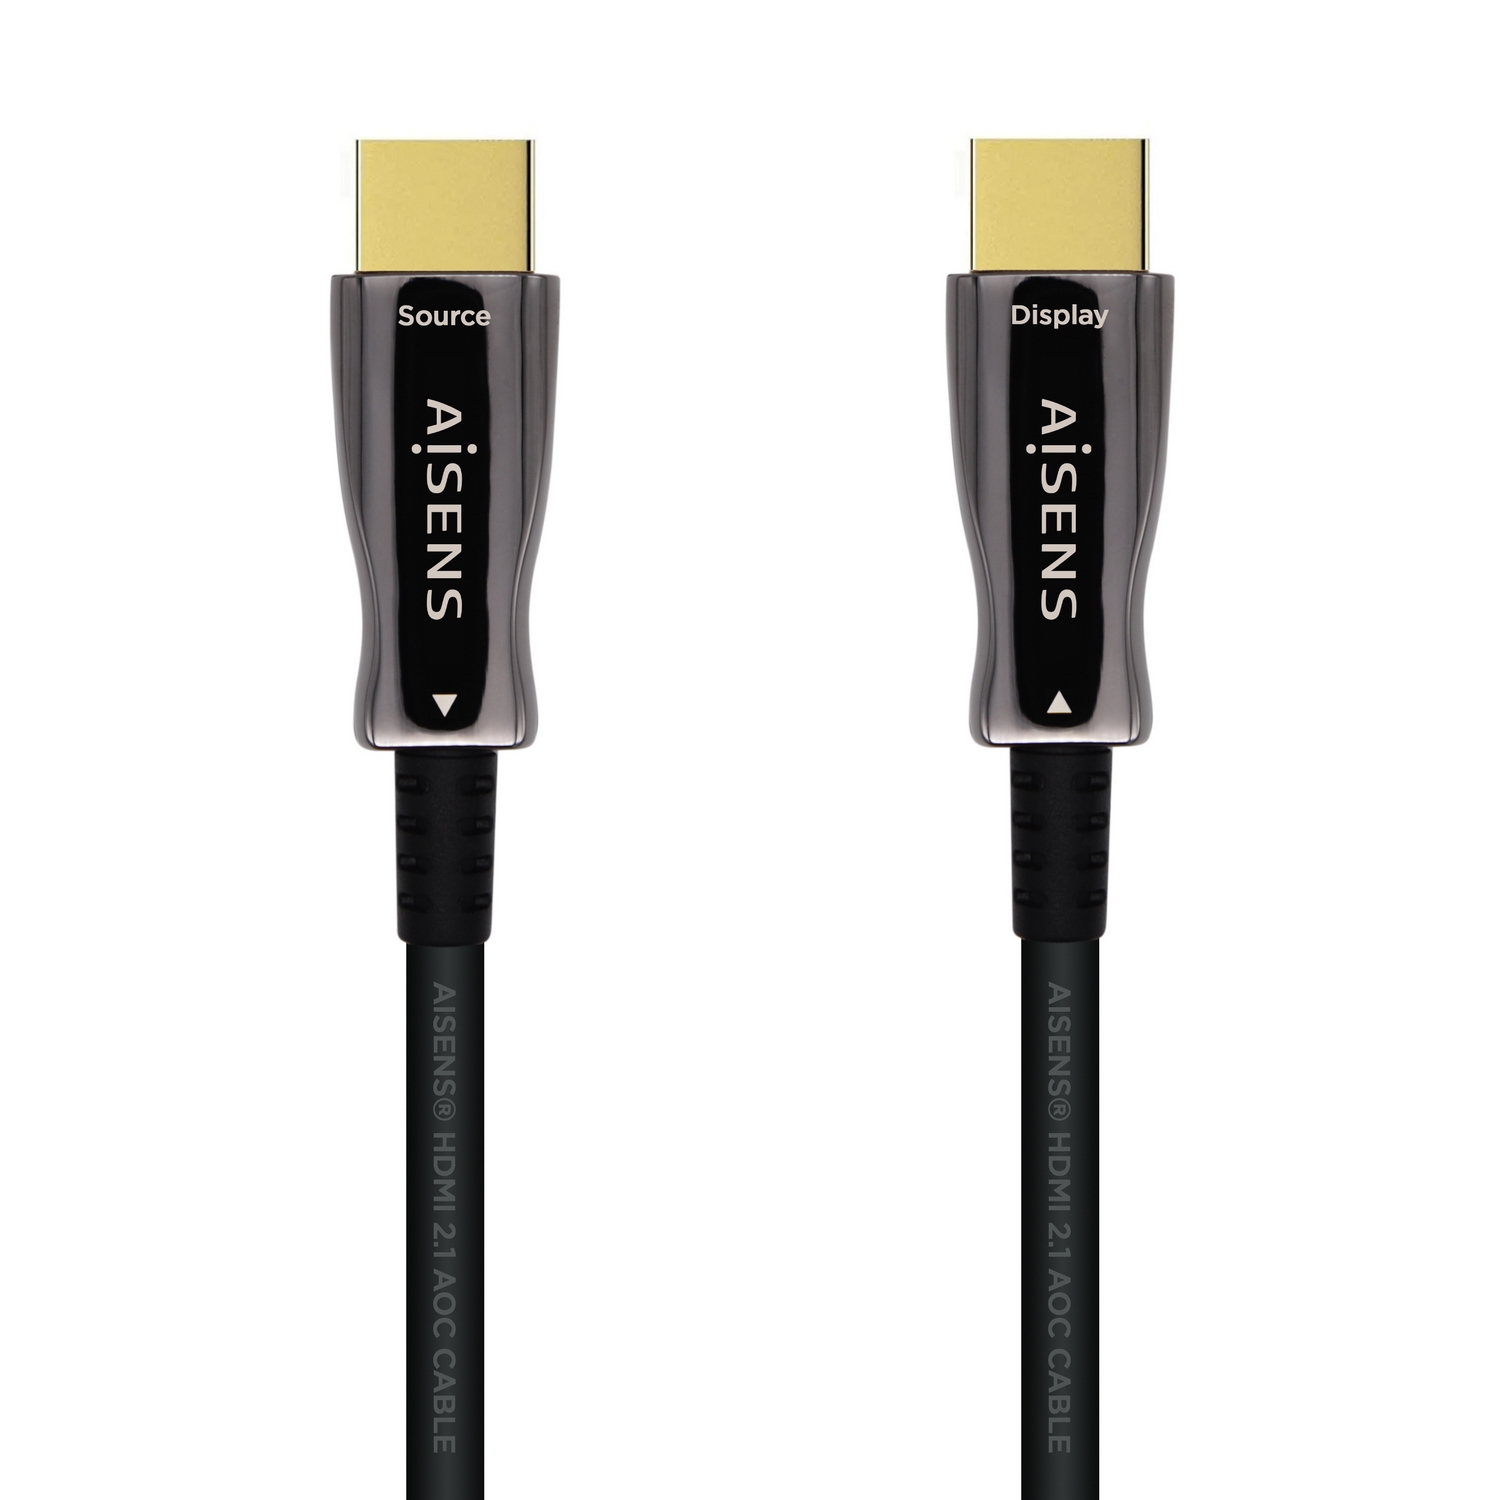 Cable HDMI V2.1 AOC (Active Optical Cable) Fibra Optica Ultra Alta